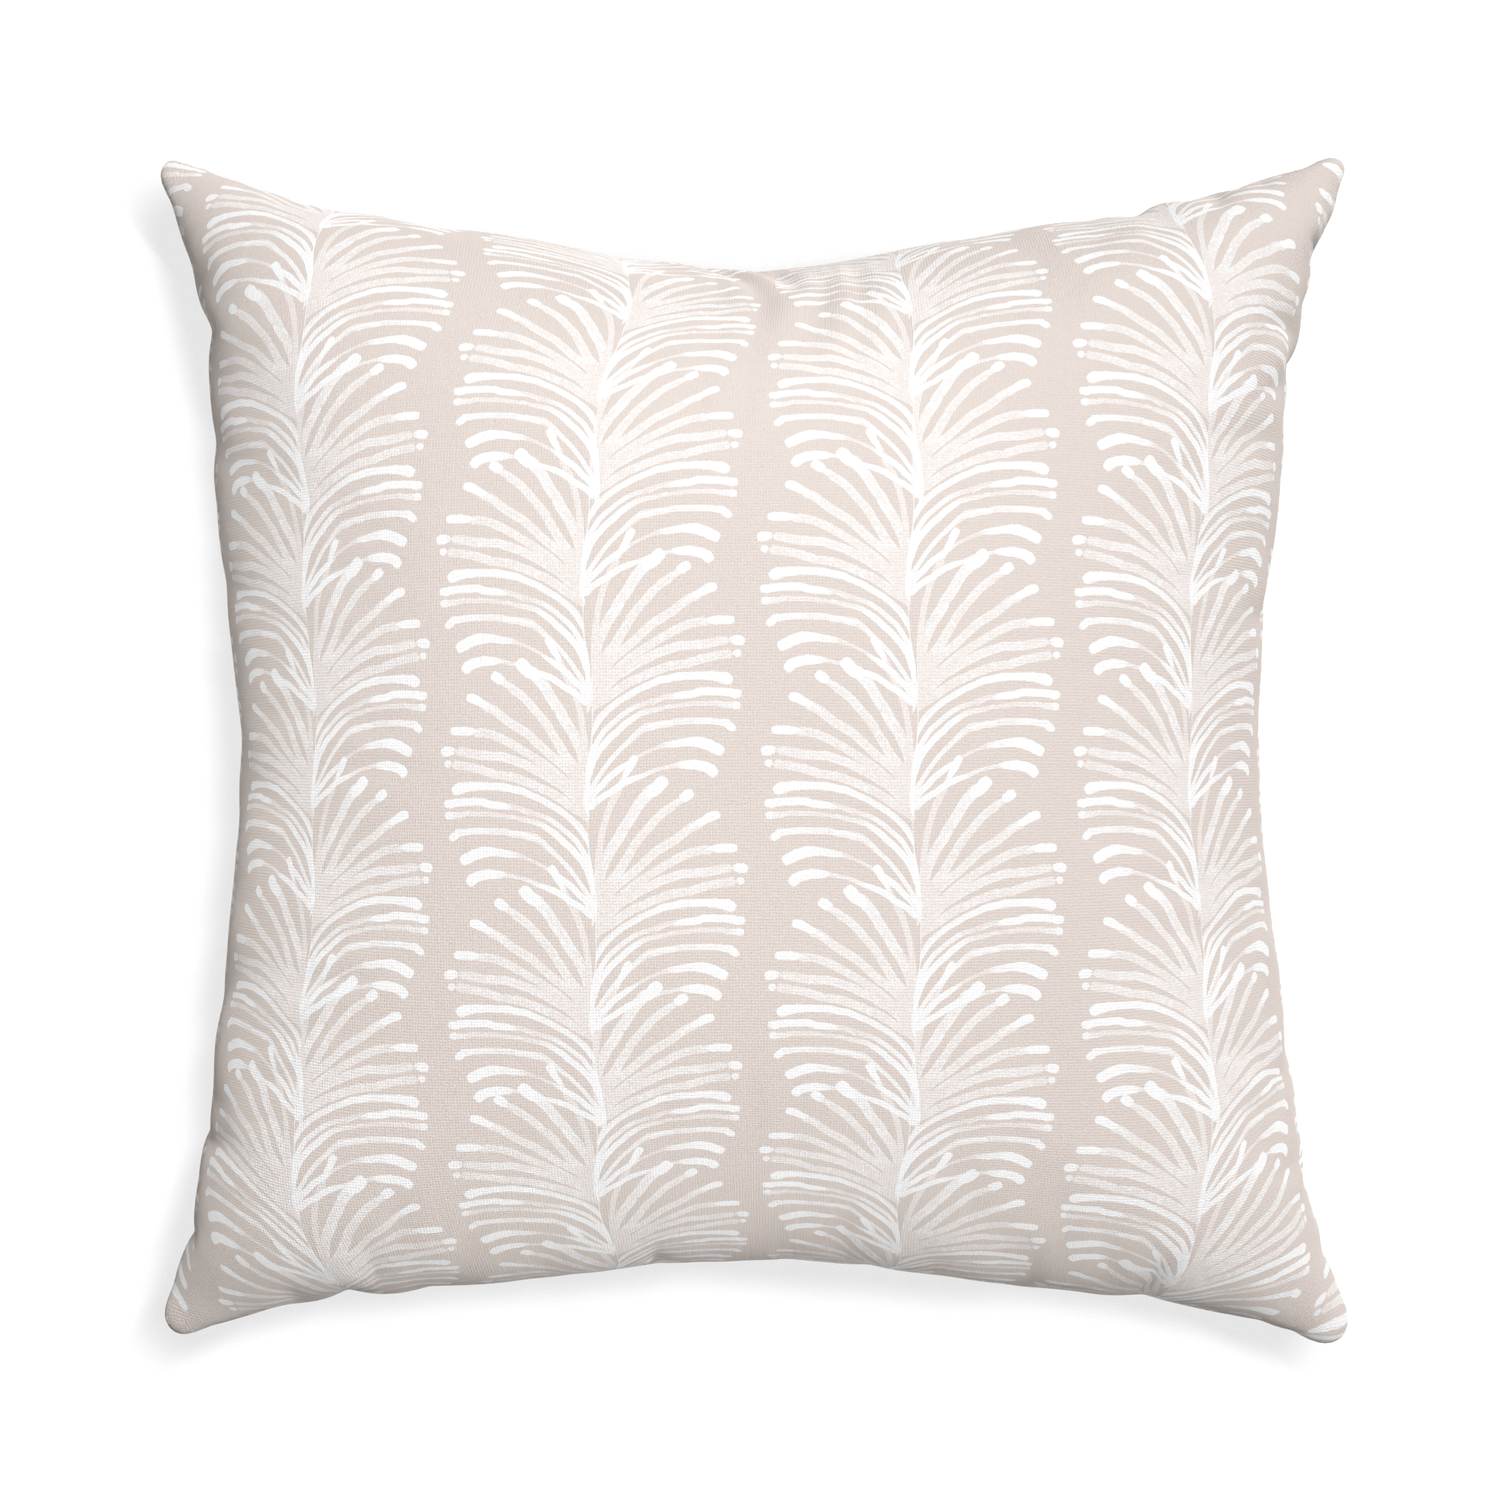 Euro-sham emma sand custom pillow with none on white background